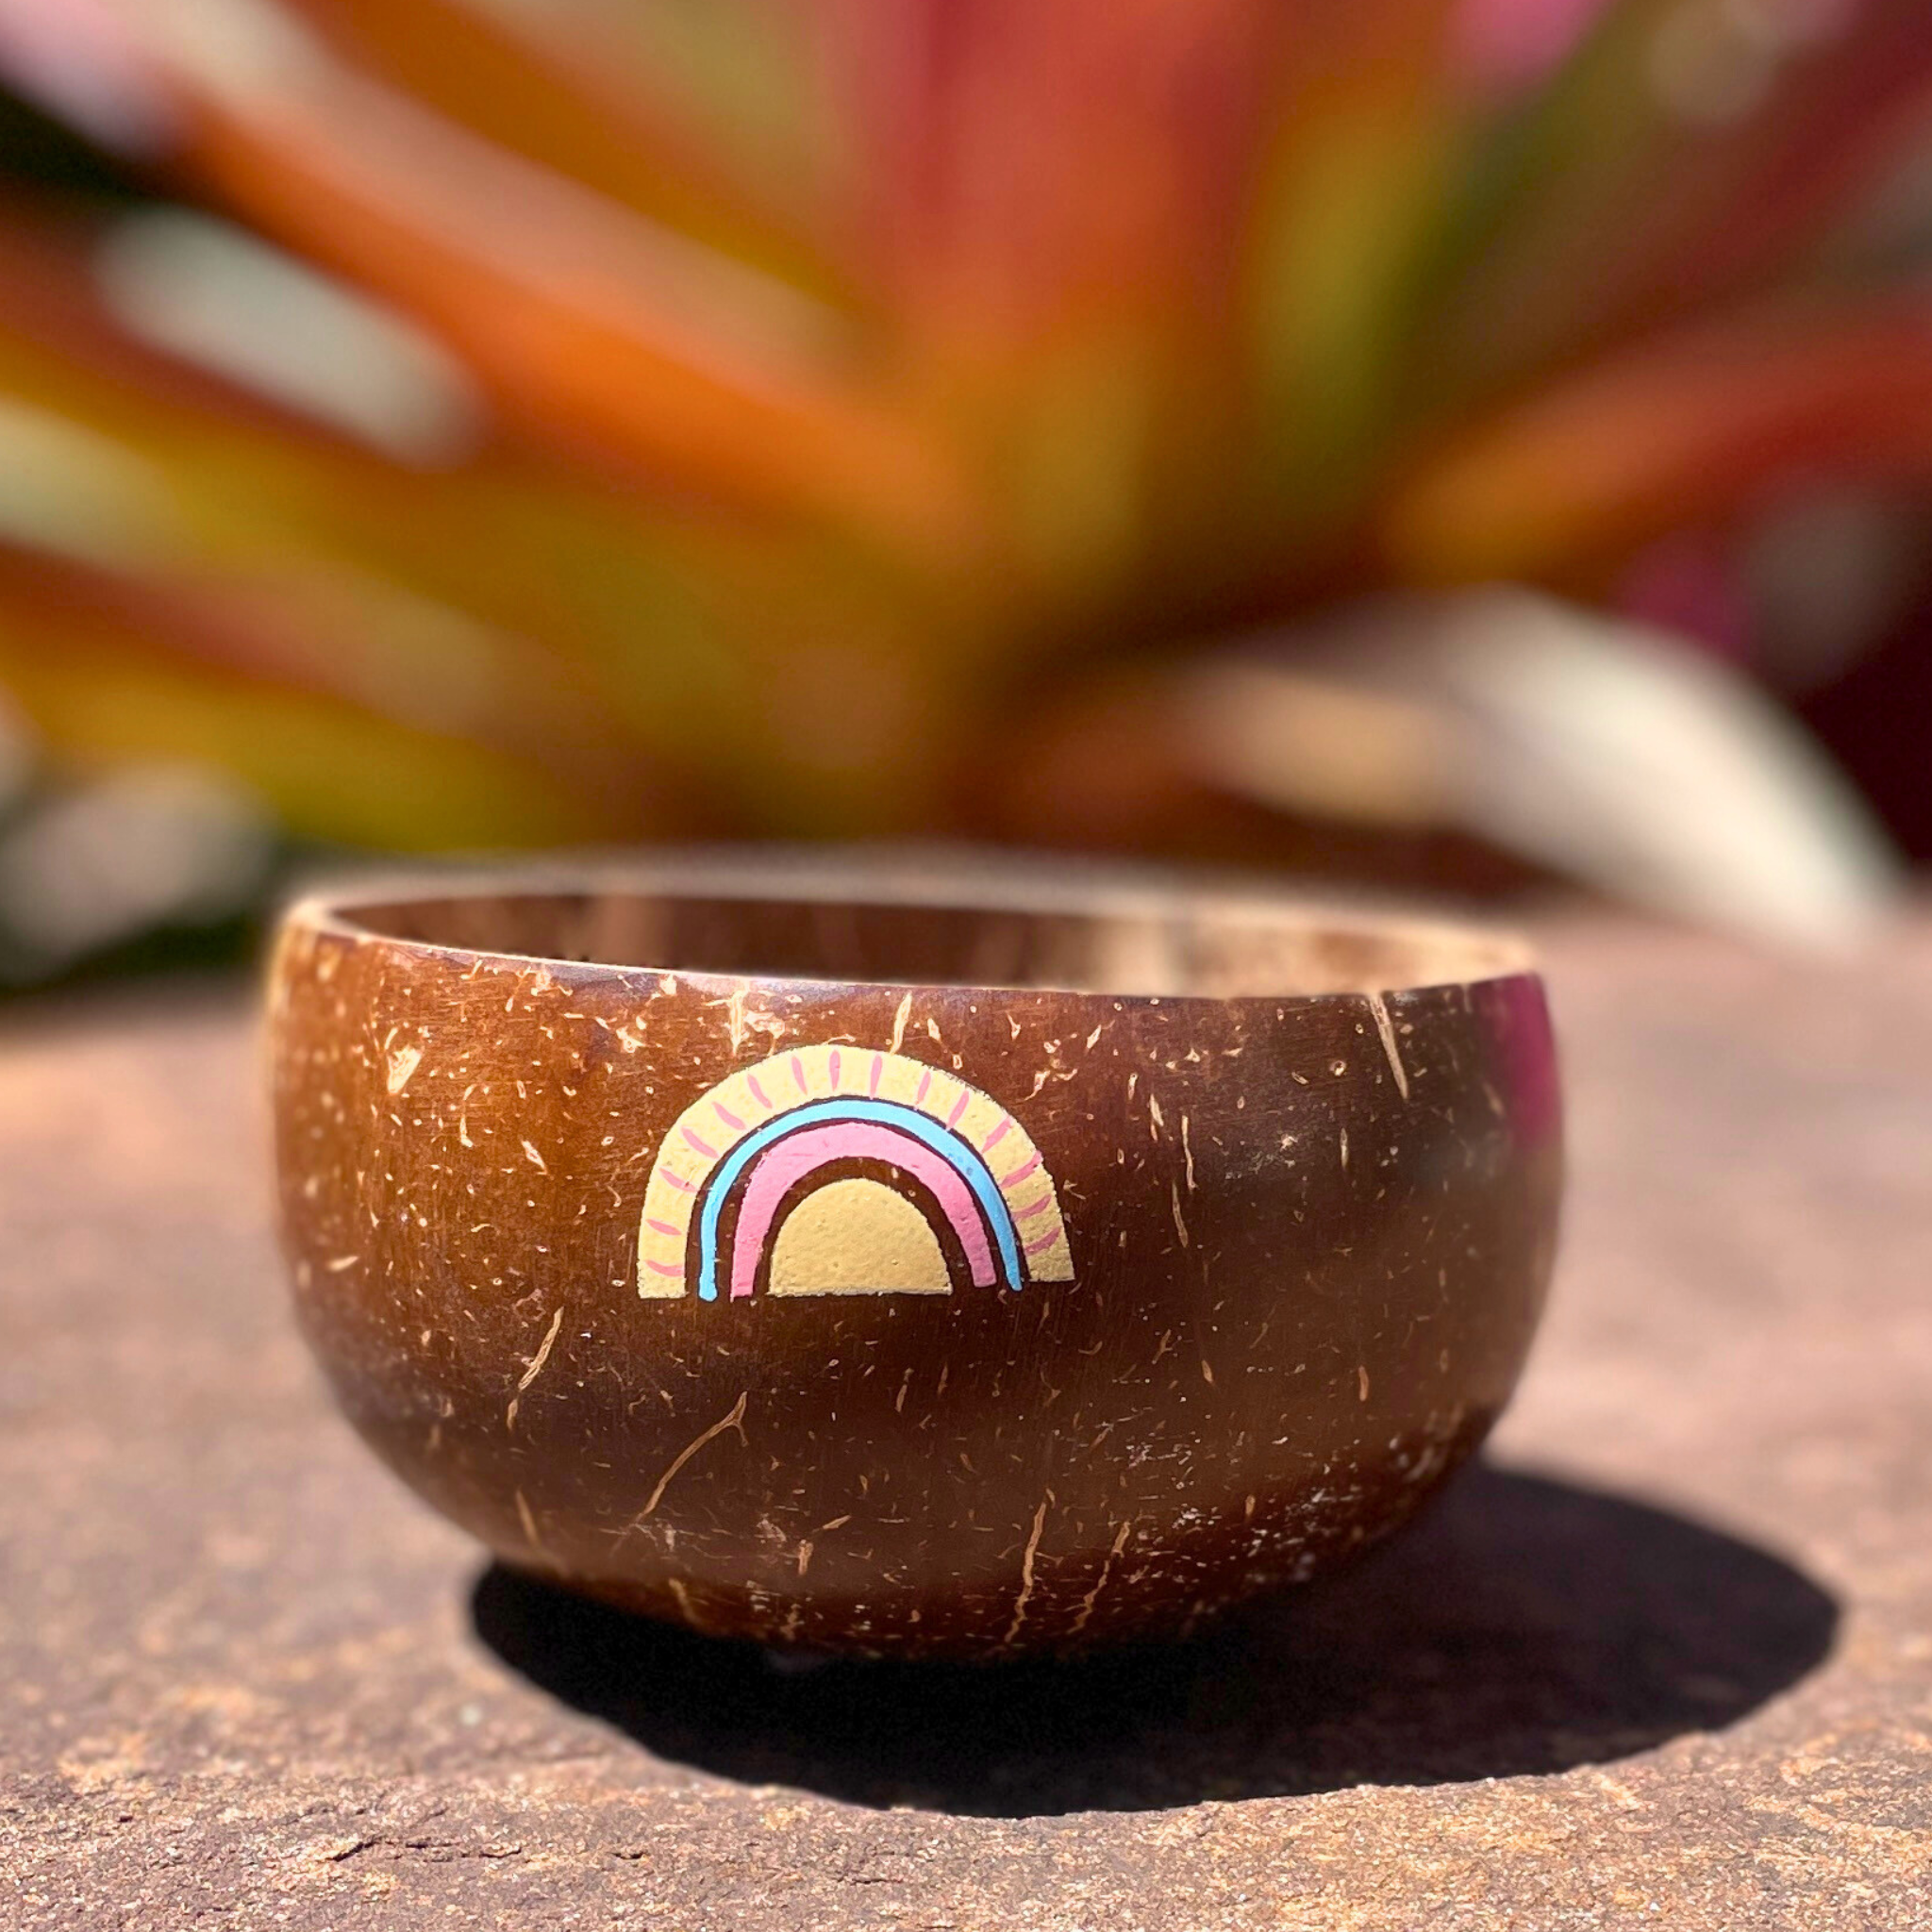 Coconut Bowls - Chasing Rainbows Coconut Bowl